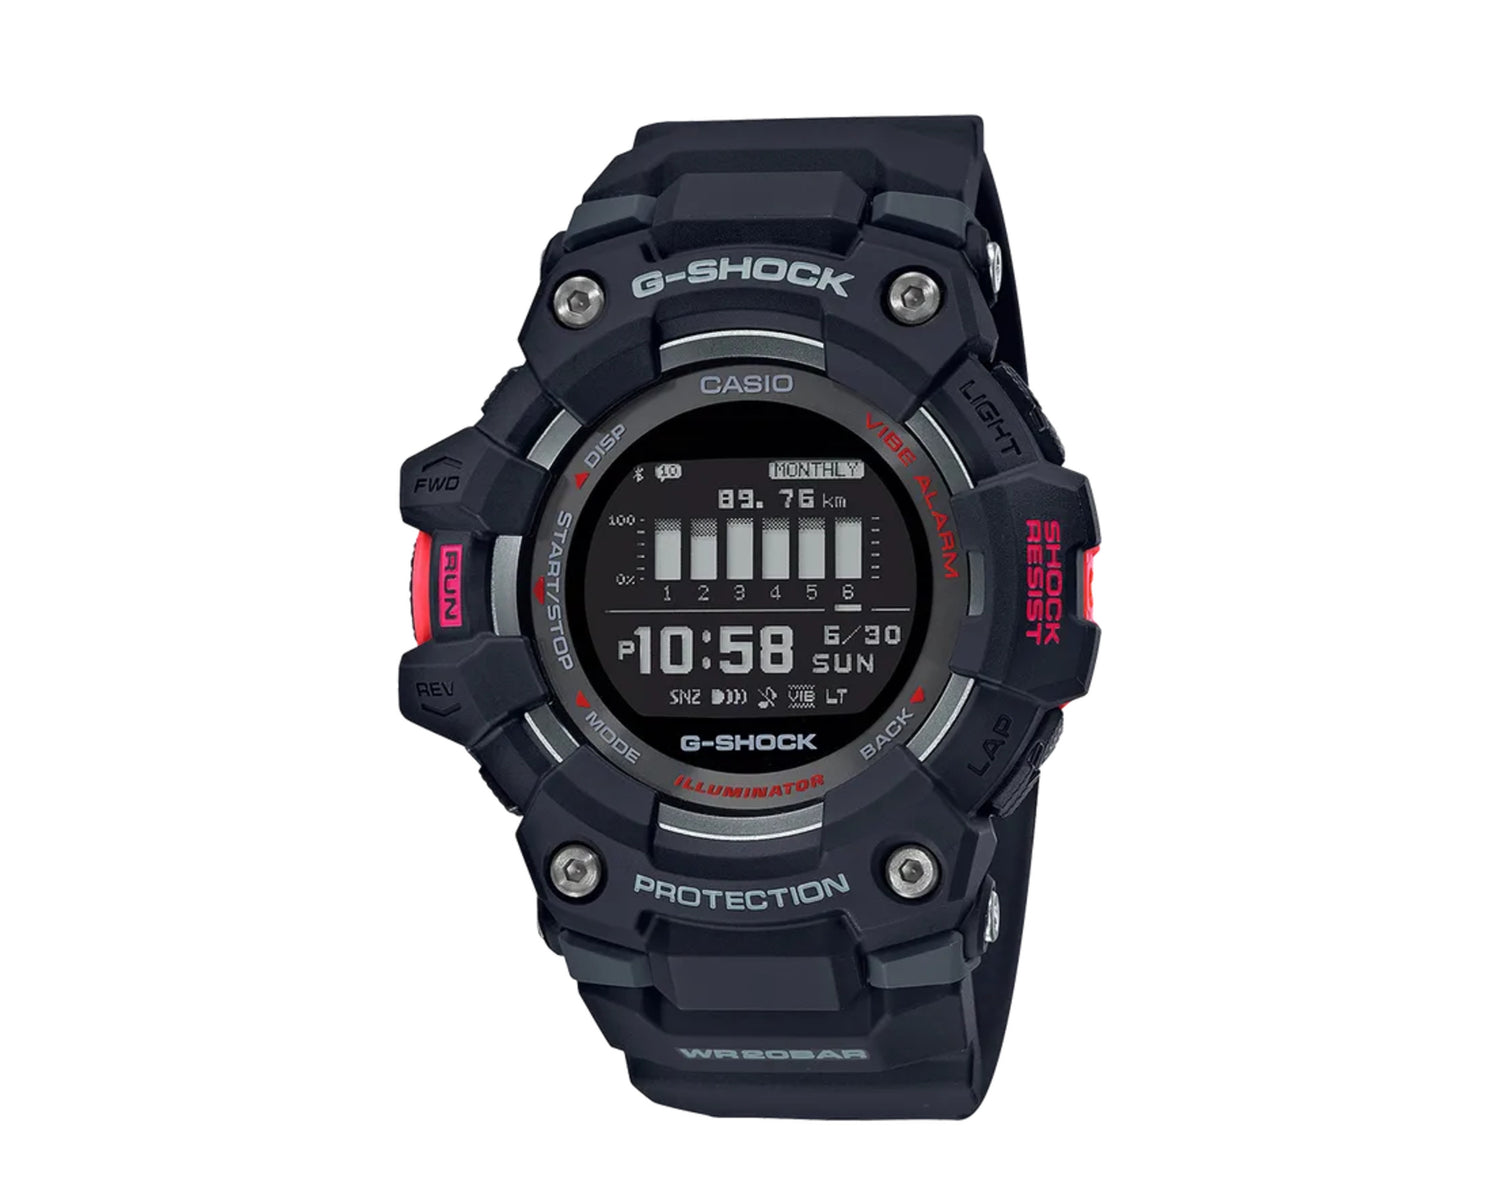 Casio G-Shock GBD100 Digital Sport Watch - Rui Hachimura Collection